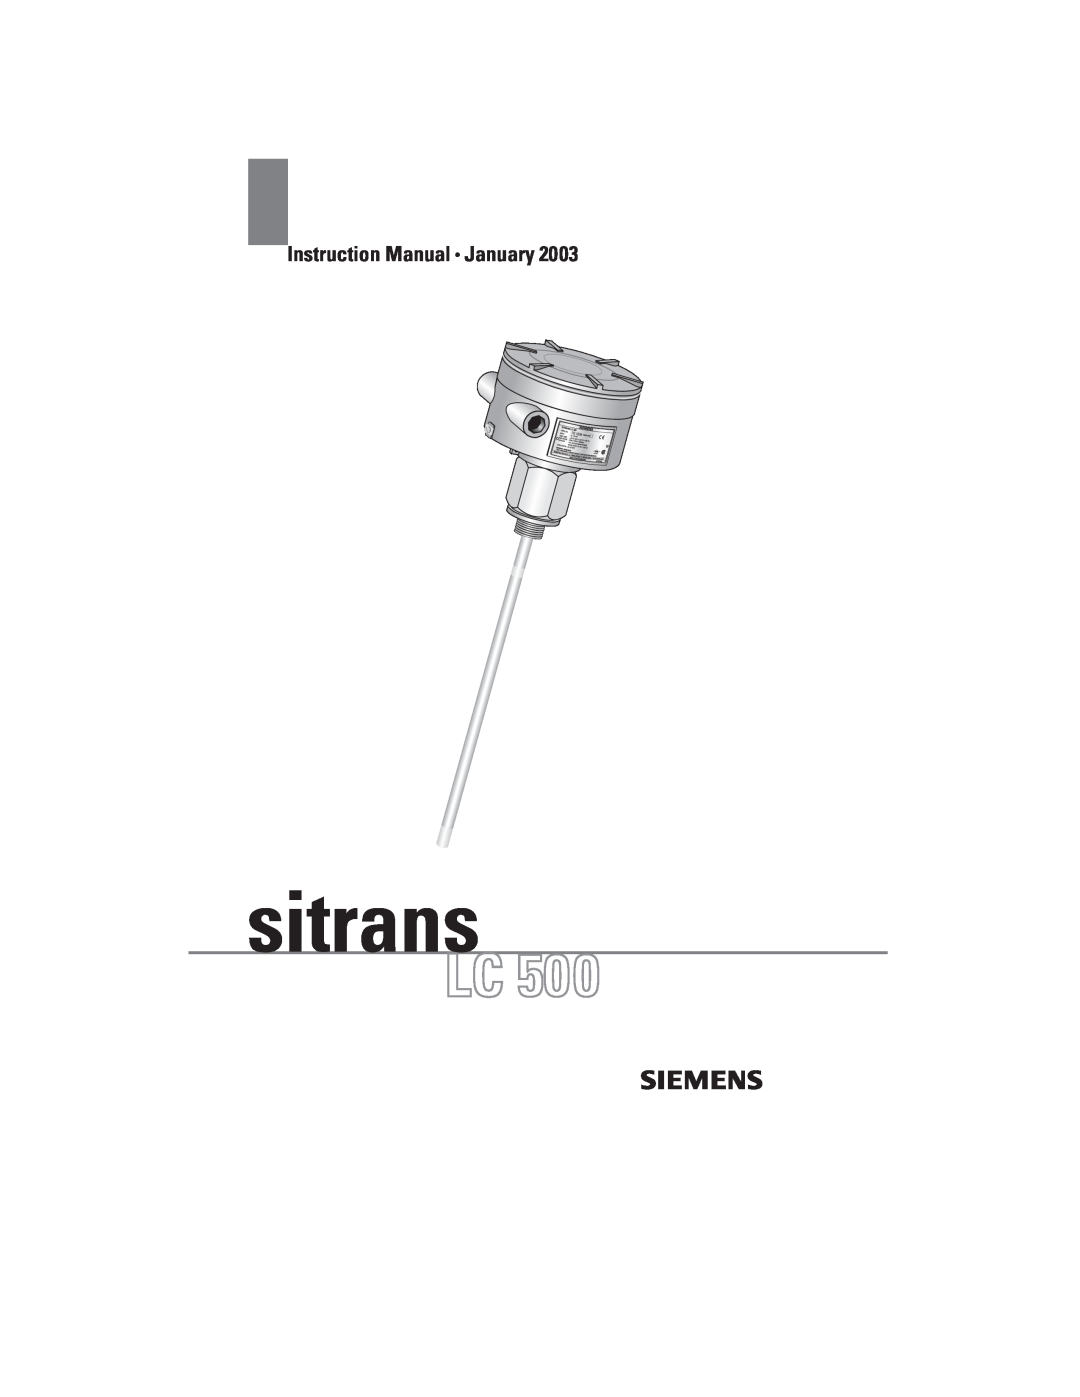 Siemens Sitrans, LC 500 instruction manual sitrans, Instruction Manual January 